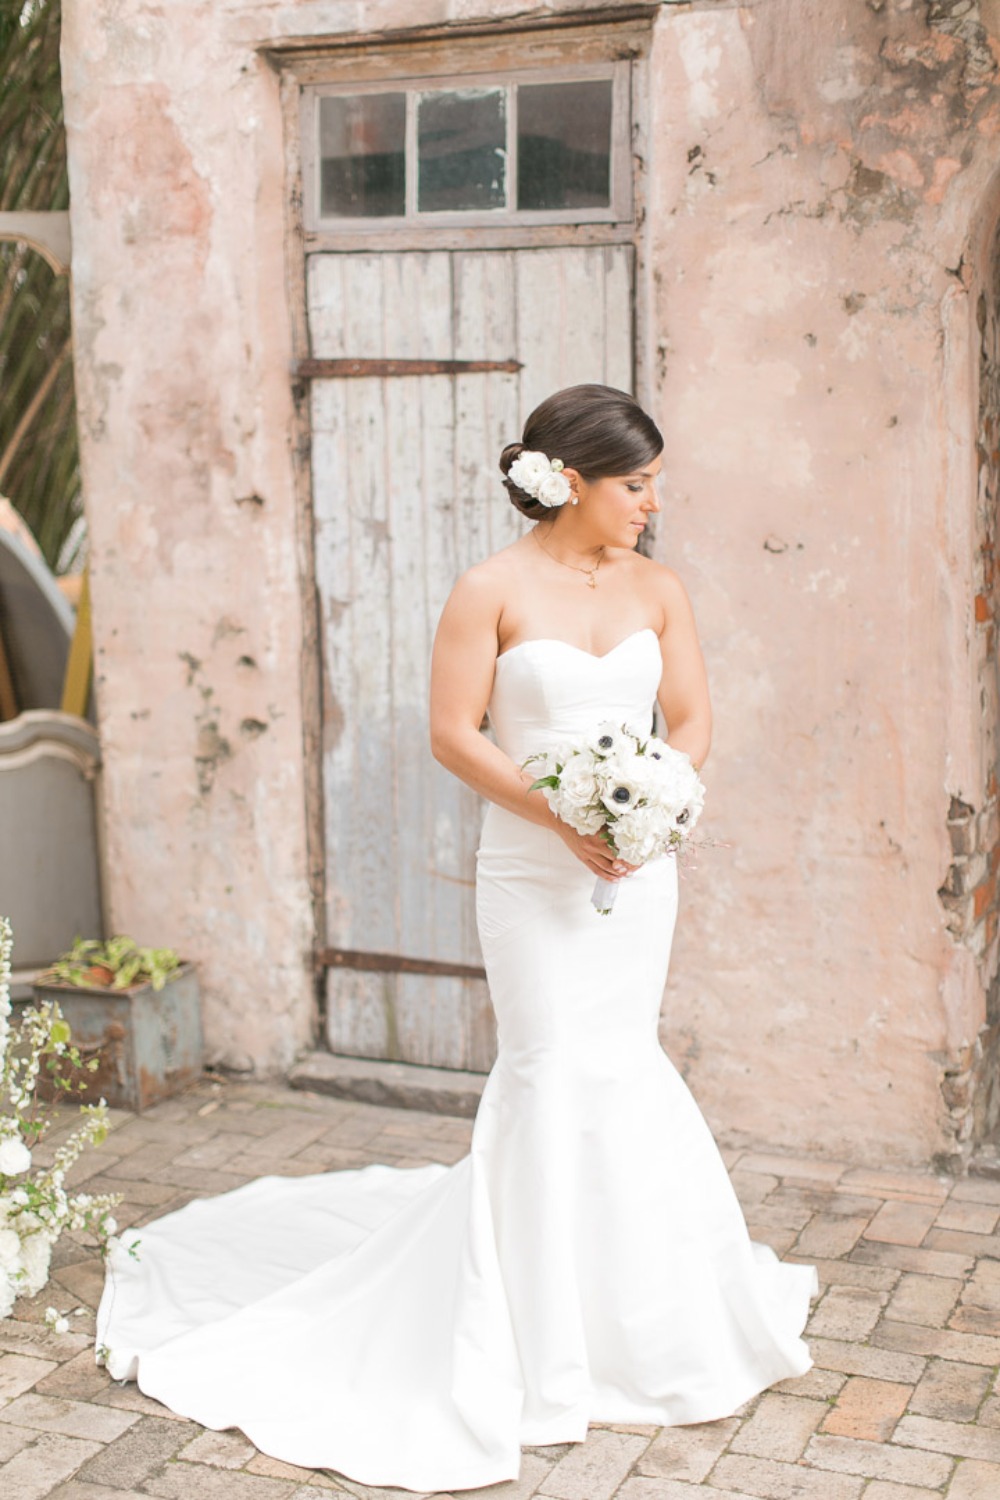 trumpet style strapless wedding dress by Nicole Miller